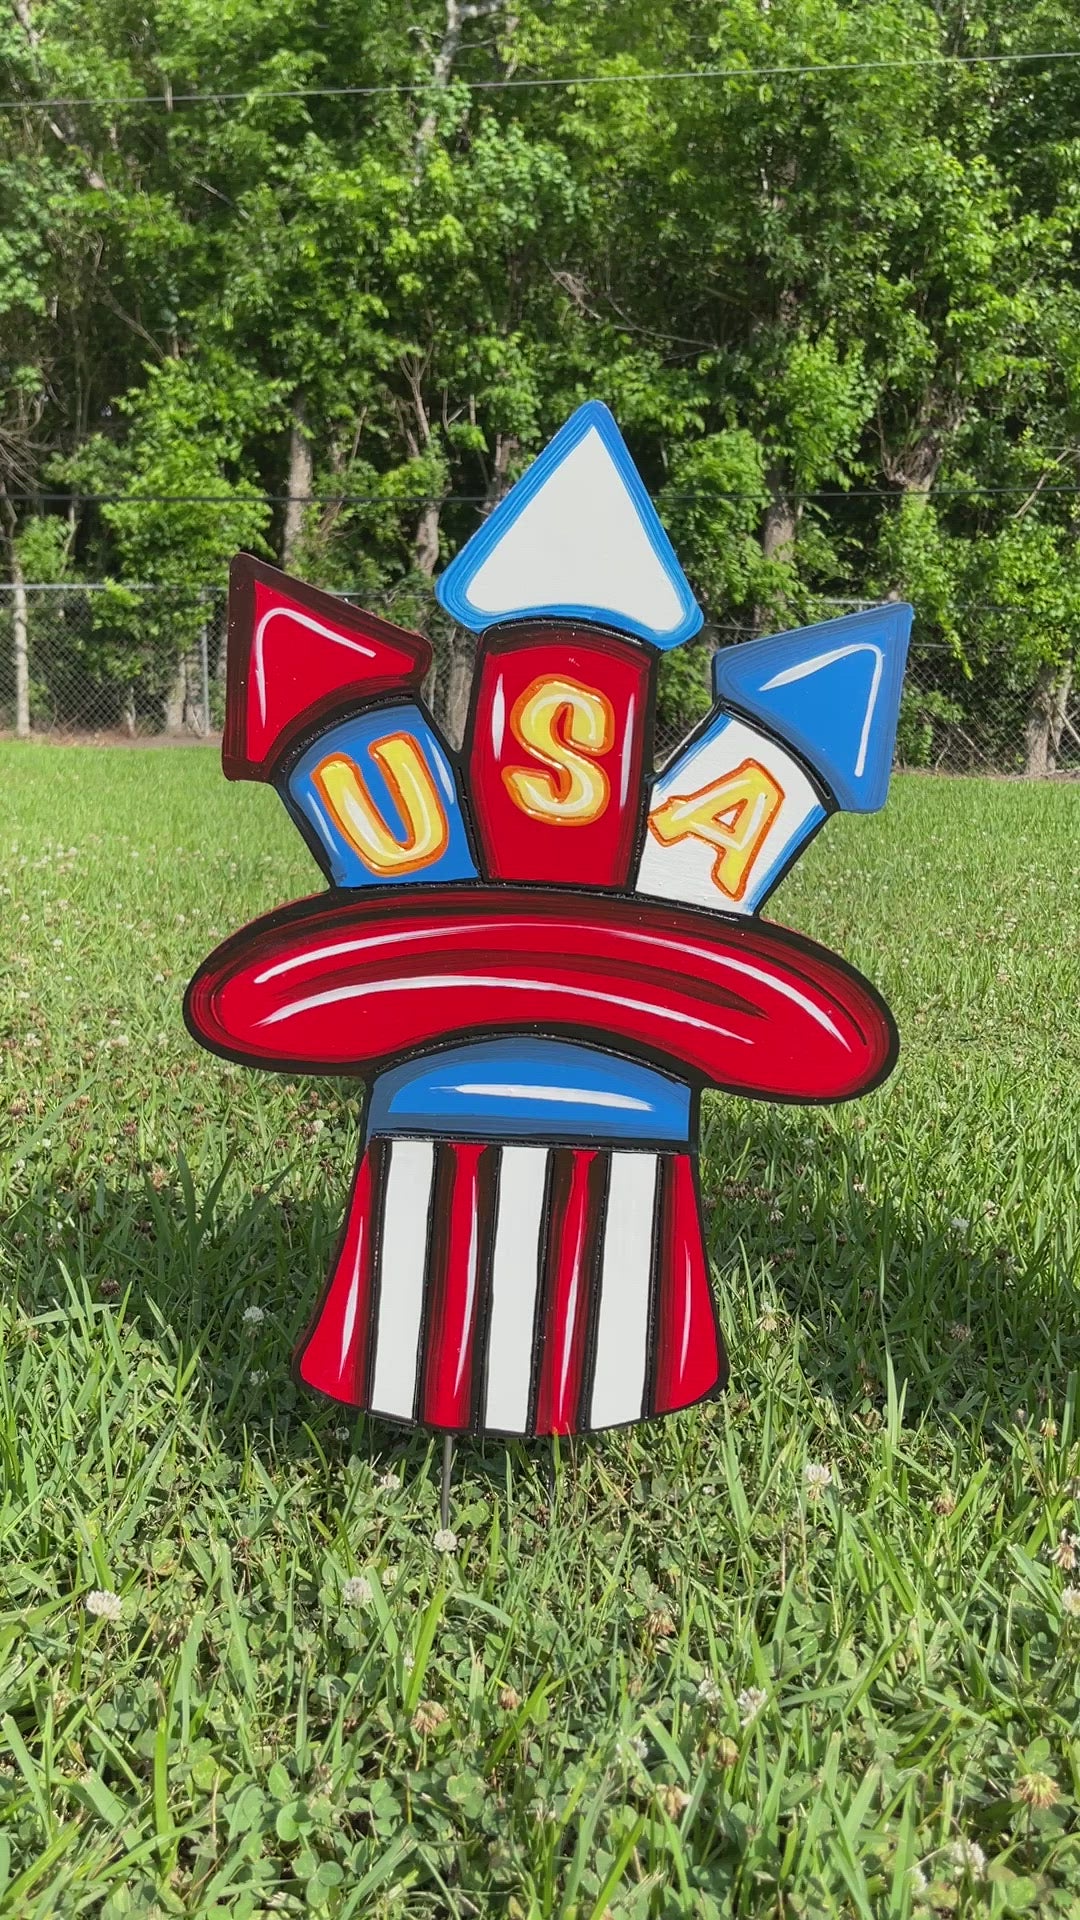 Fire cracker USA hat blank yard art decoration